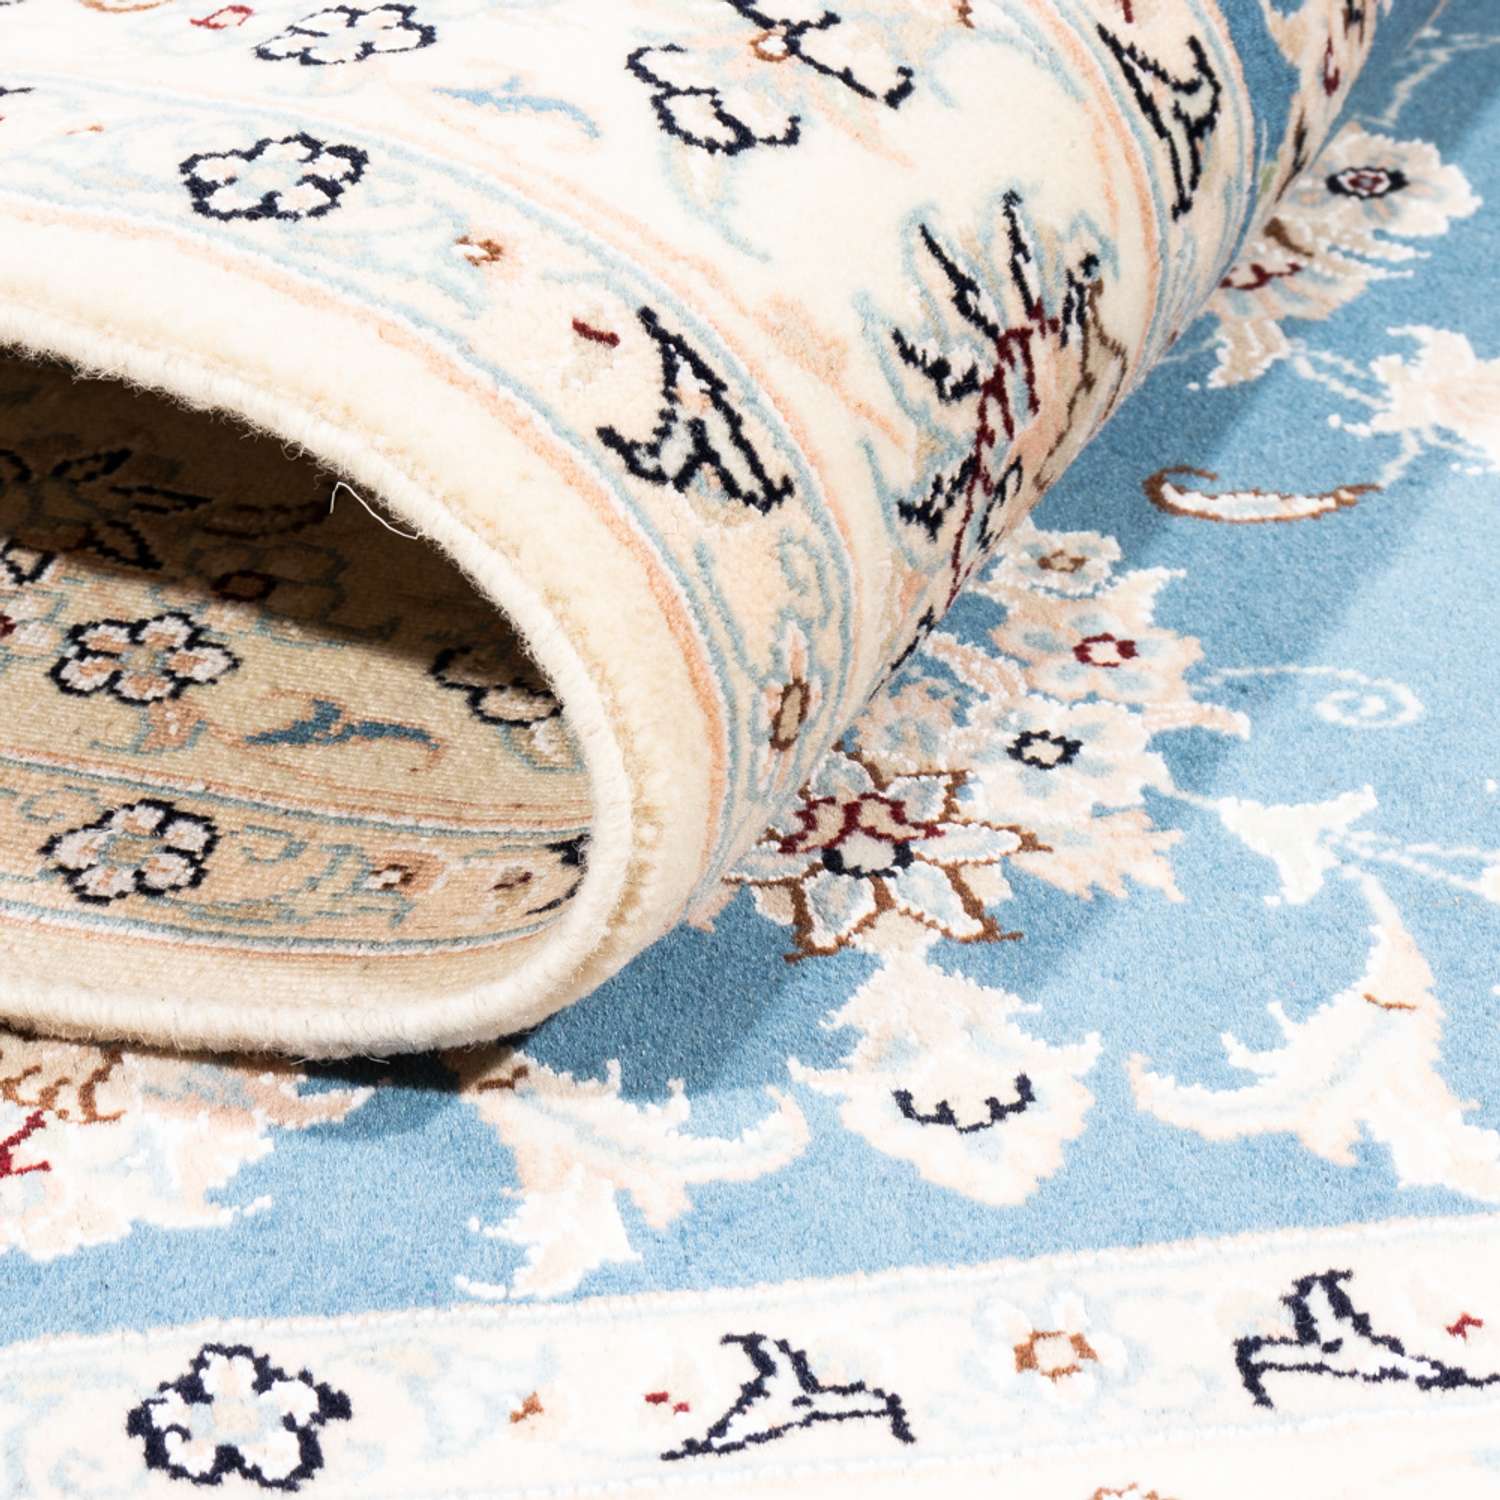 Perzisch tapijt - Nain - Premium - 176 x 121 cm - blauw